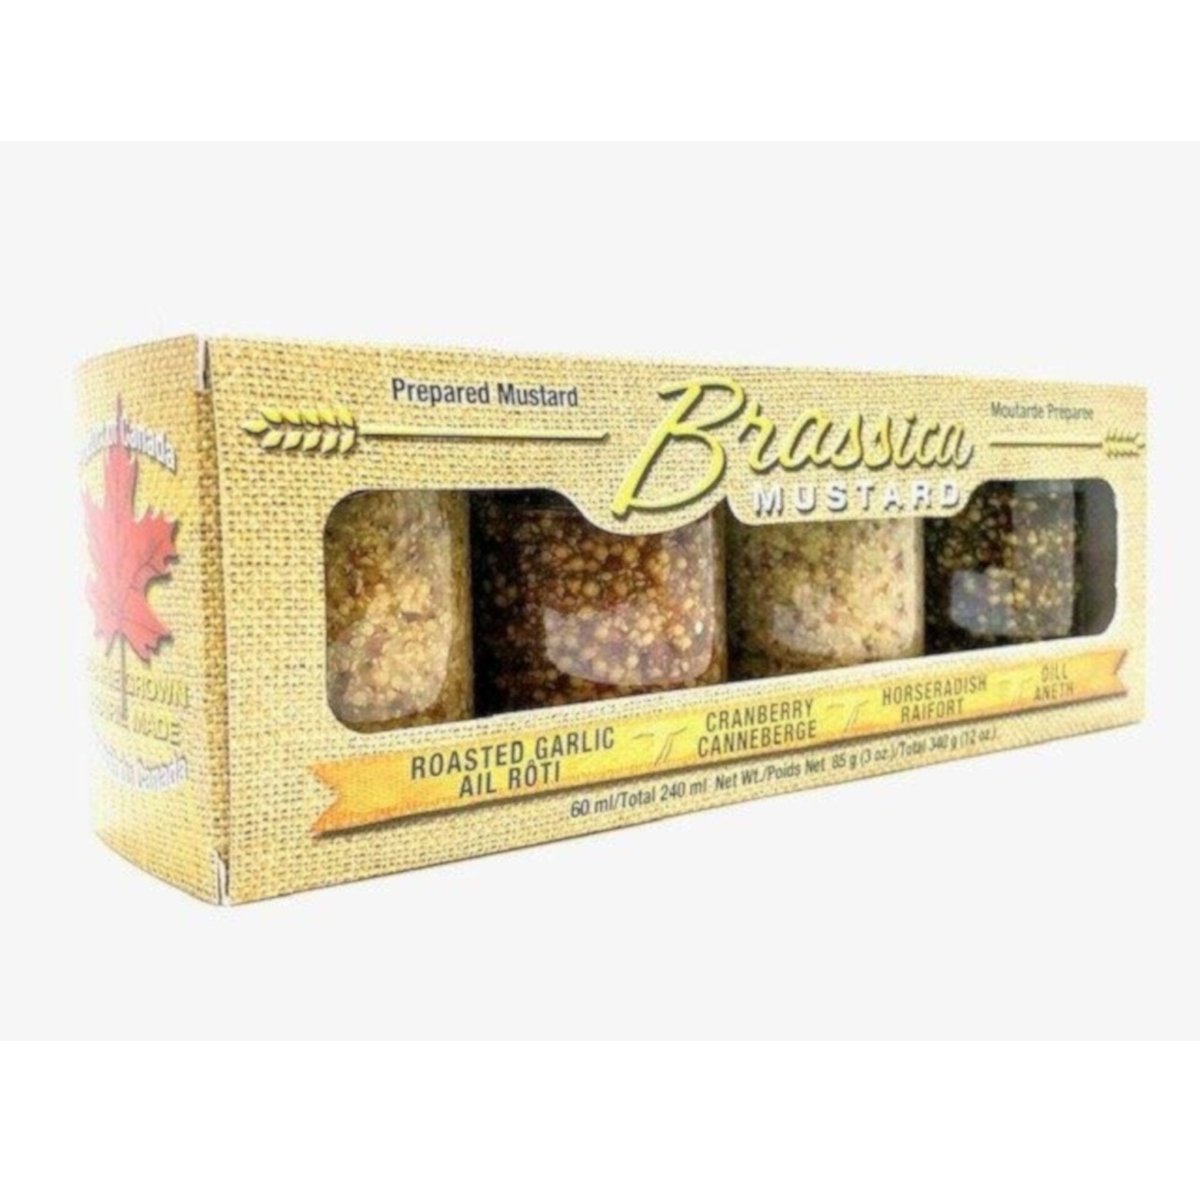 GotoPopupYYC - Brassica Mustard - Assorted Box - 4 x 60ml -BM-AB-0001